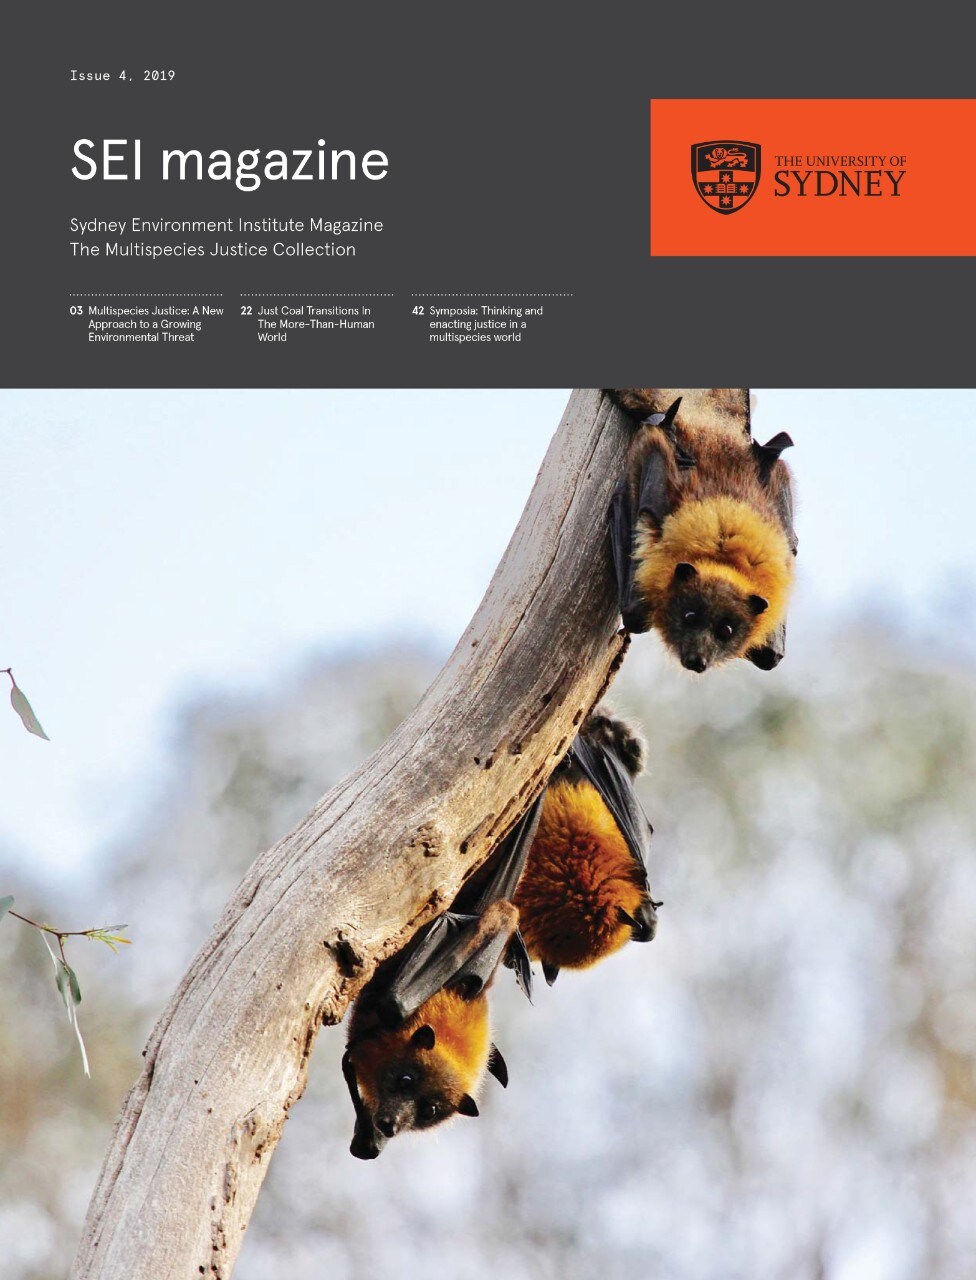 Cover image SEI magazine (photo of fruit bats)